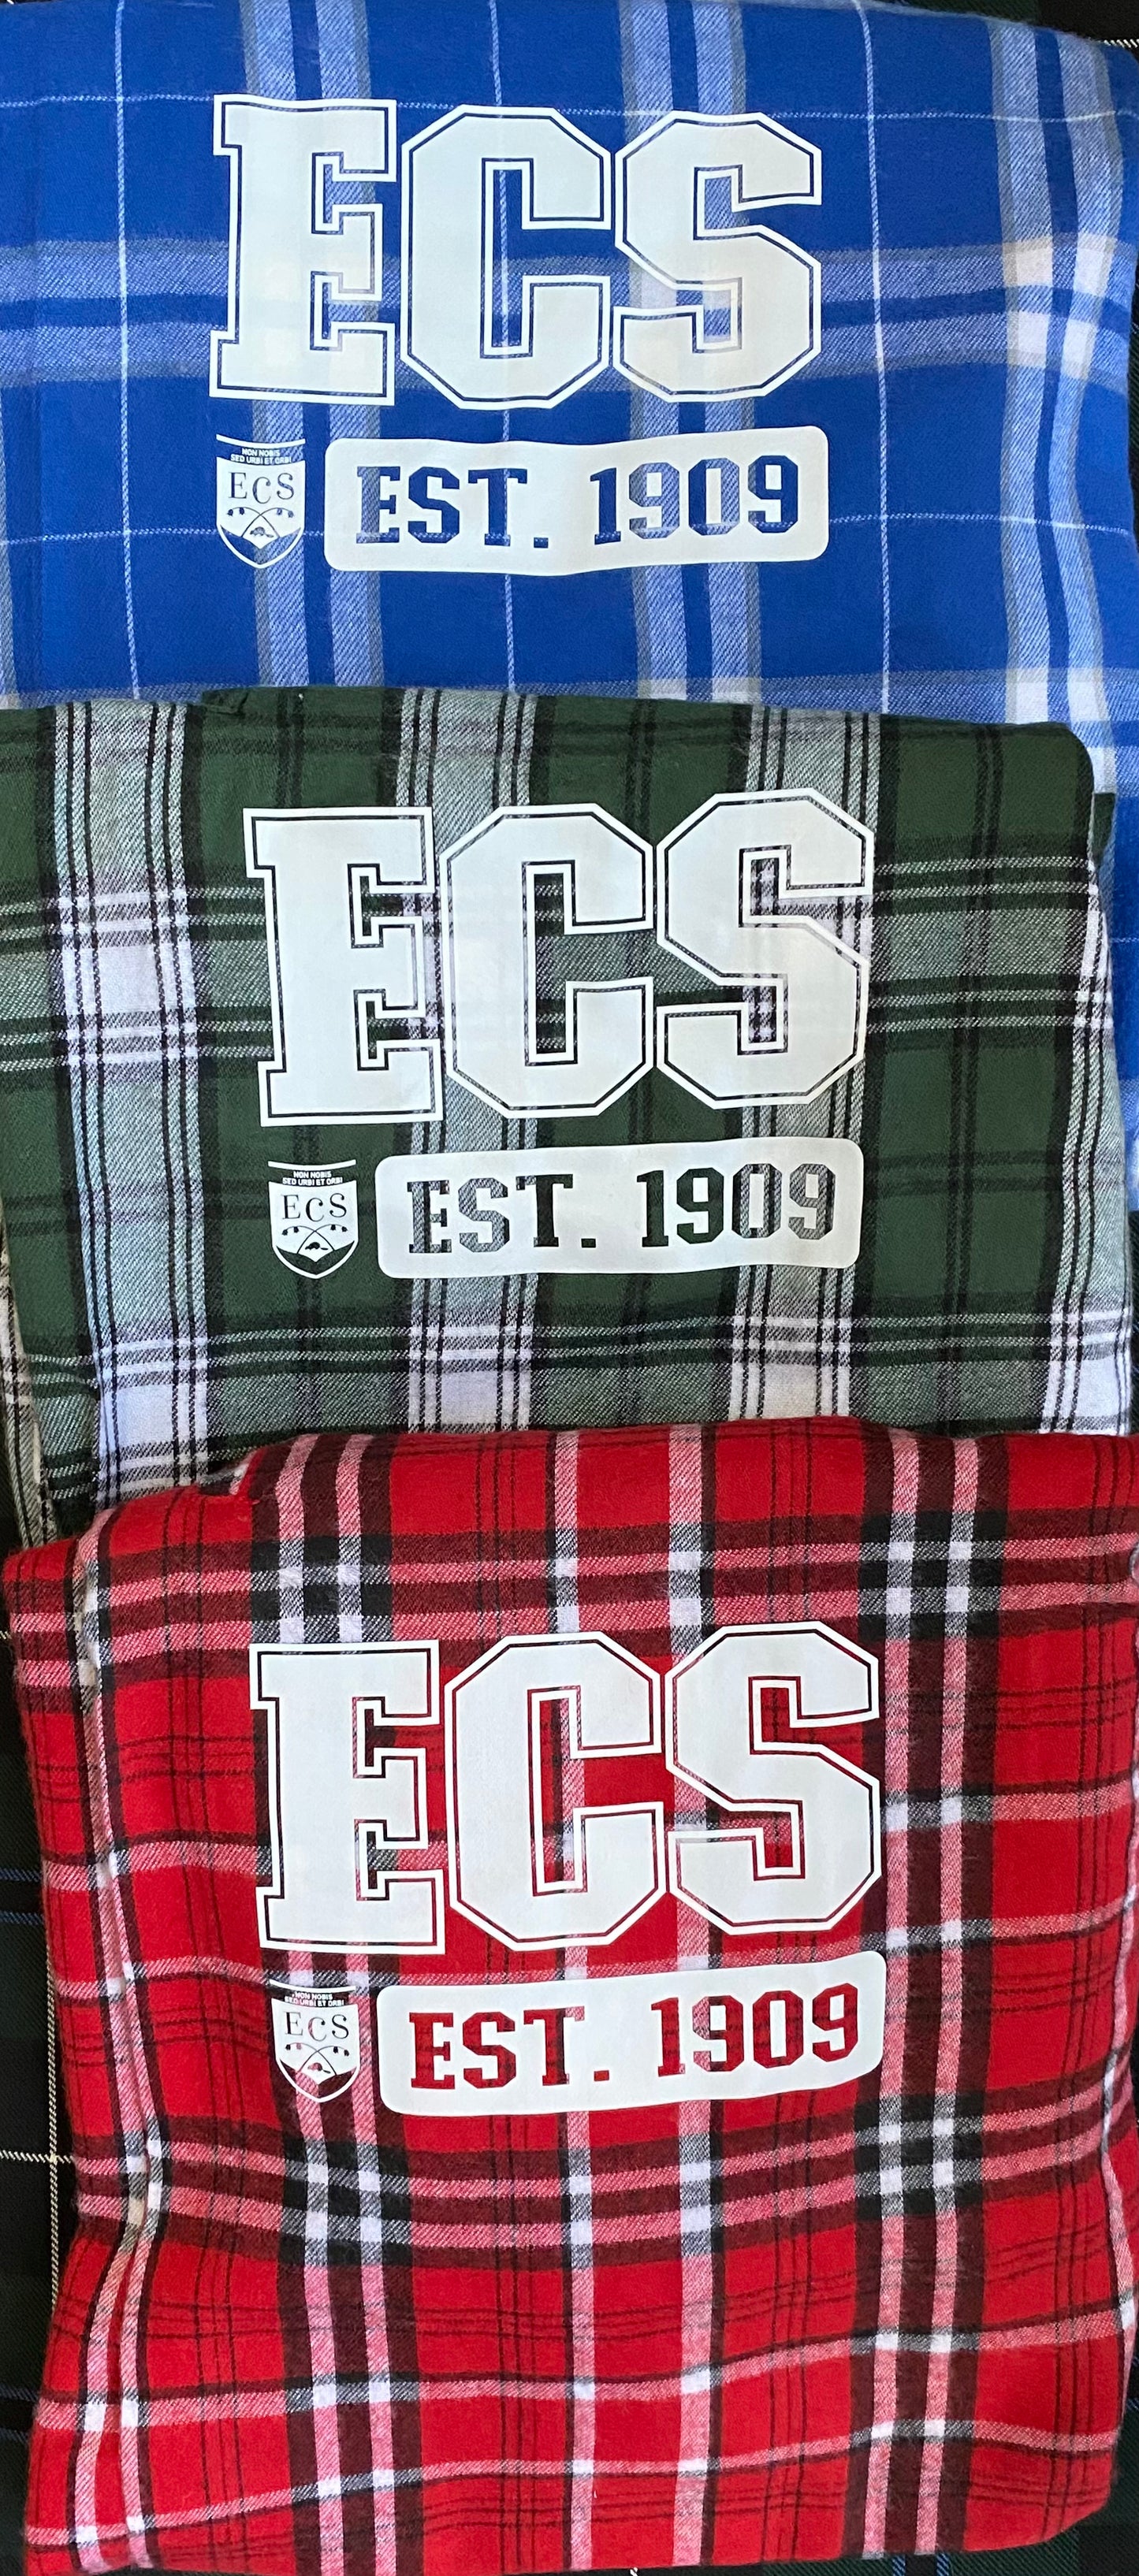 ECS Pyjama Pants